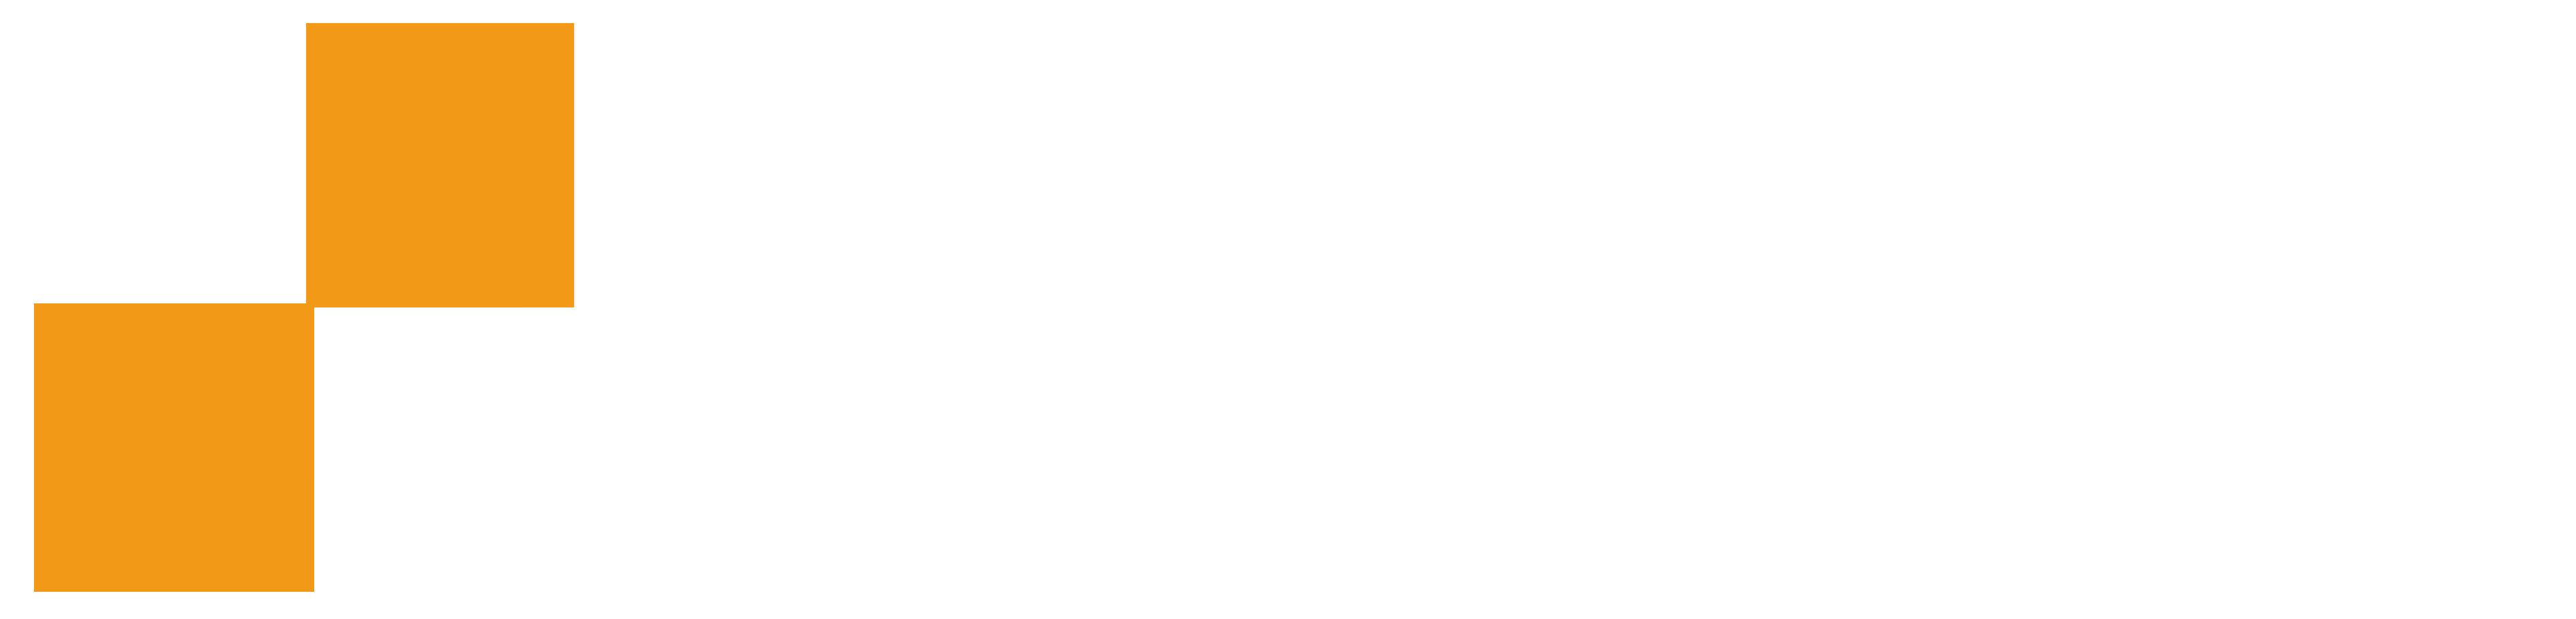 Logo_Trepedia_w.png